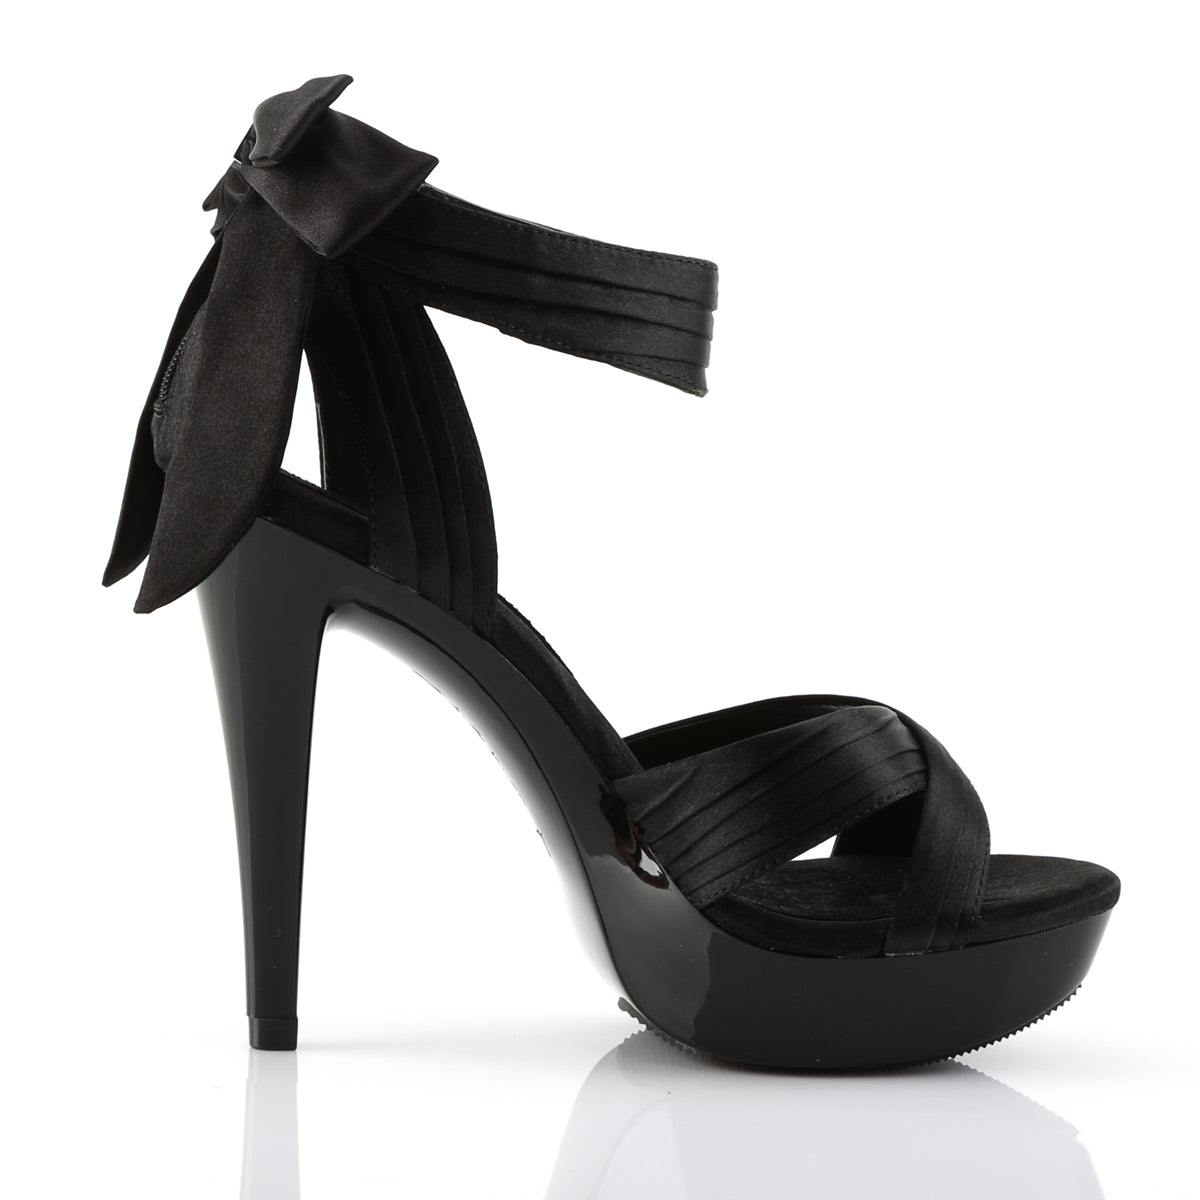 COCKTAIL-568 Fabulicious 5 Inch Heel Black Satin Sexy Shoes-Fabulicious- Sexy Shoes Fetish Heels